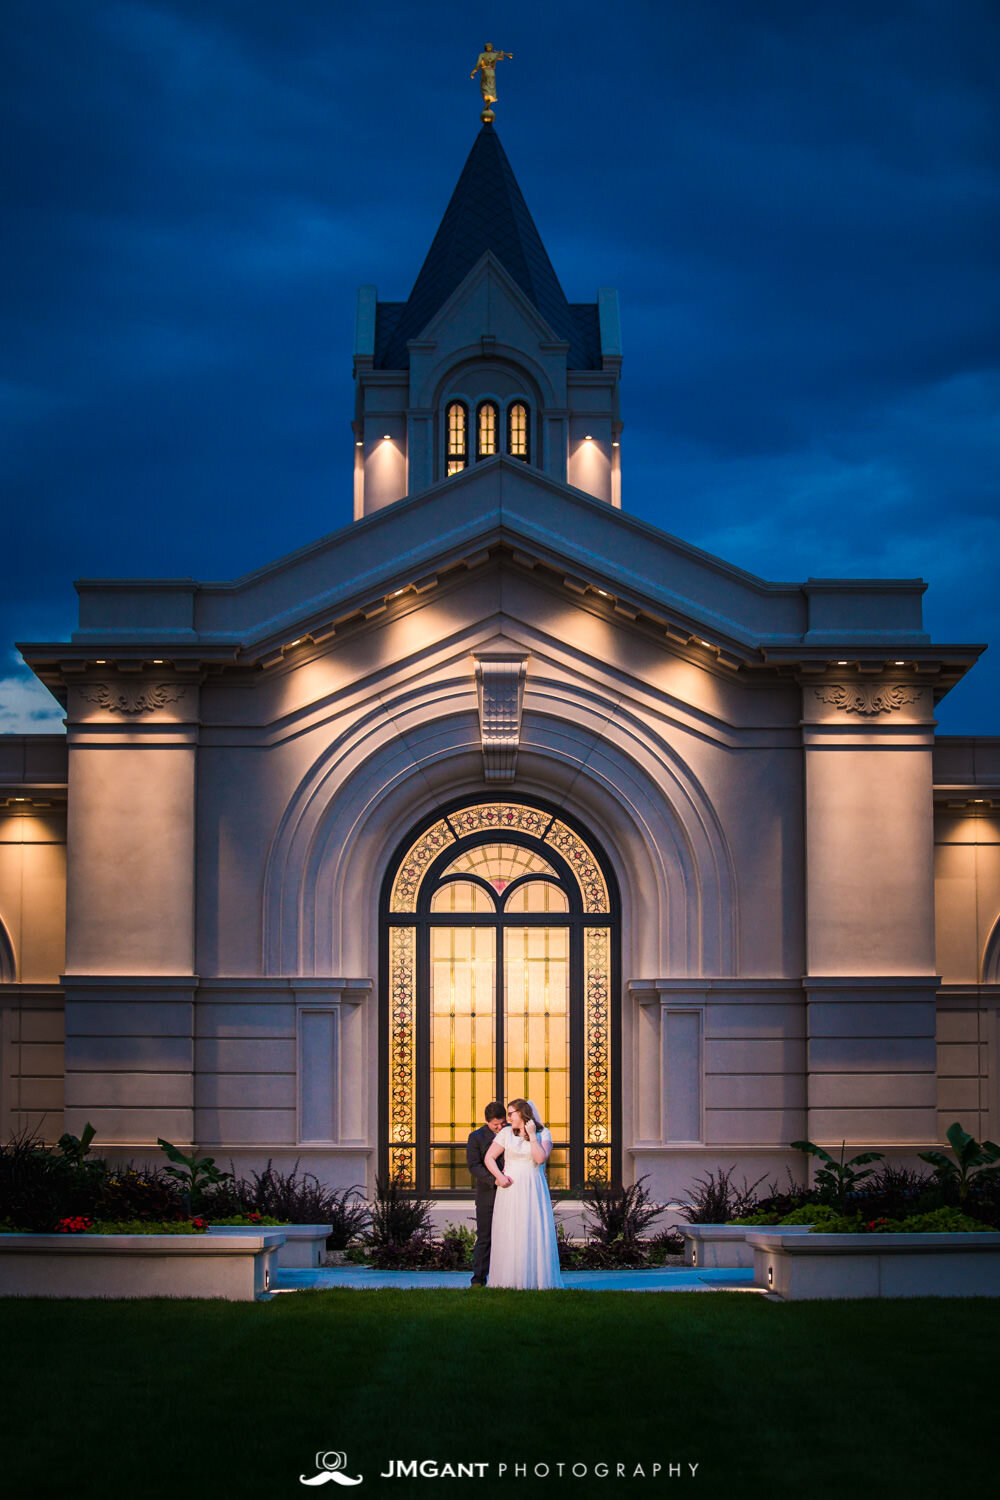  Katie and Conrad's Wedding Formals at Fort Collins Mormon Temple
© JMGant Photography
http://www.jmgantphotography.com/ 